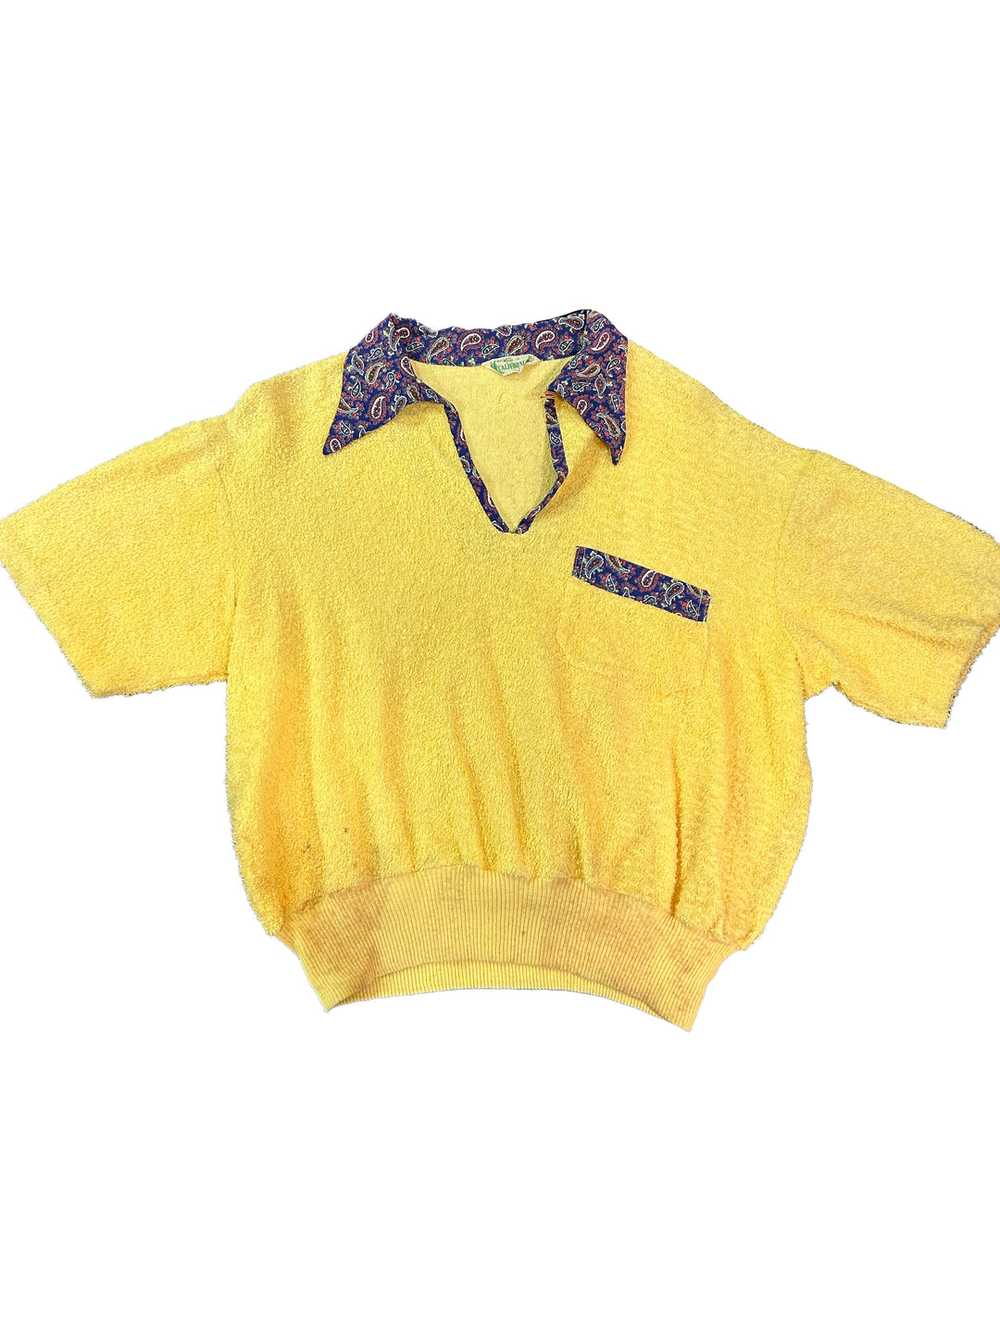 Mens 50s Yellow Terrycloth short Sleeve Shirt wit… - image 1